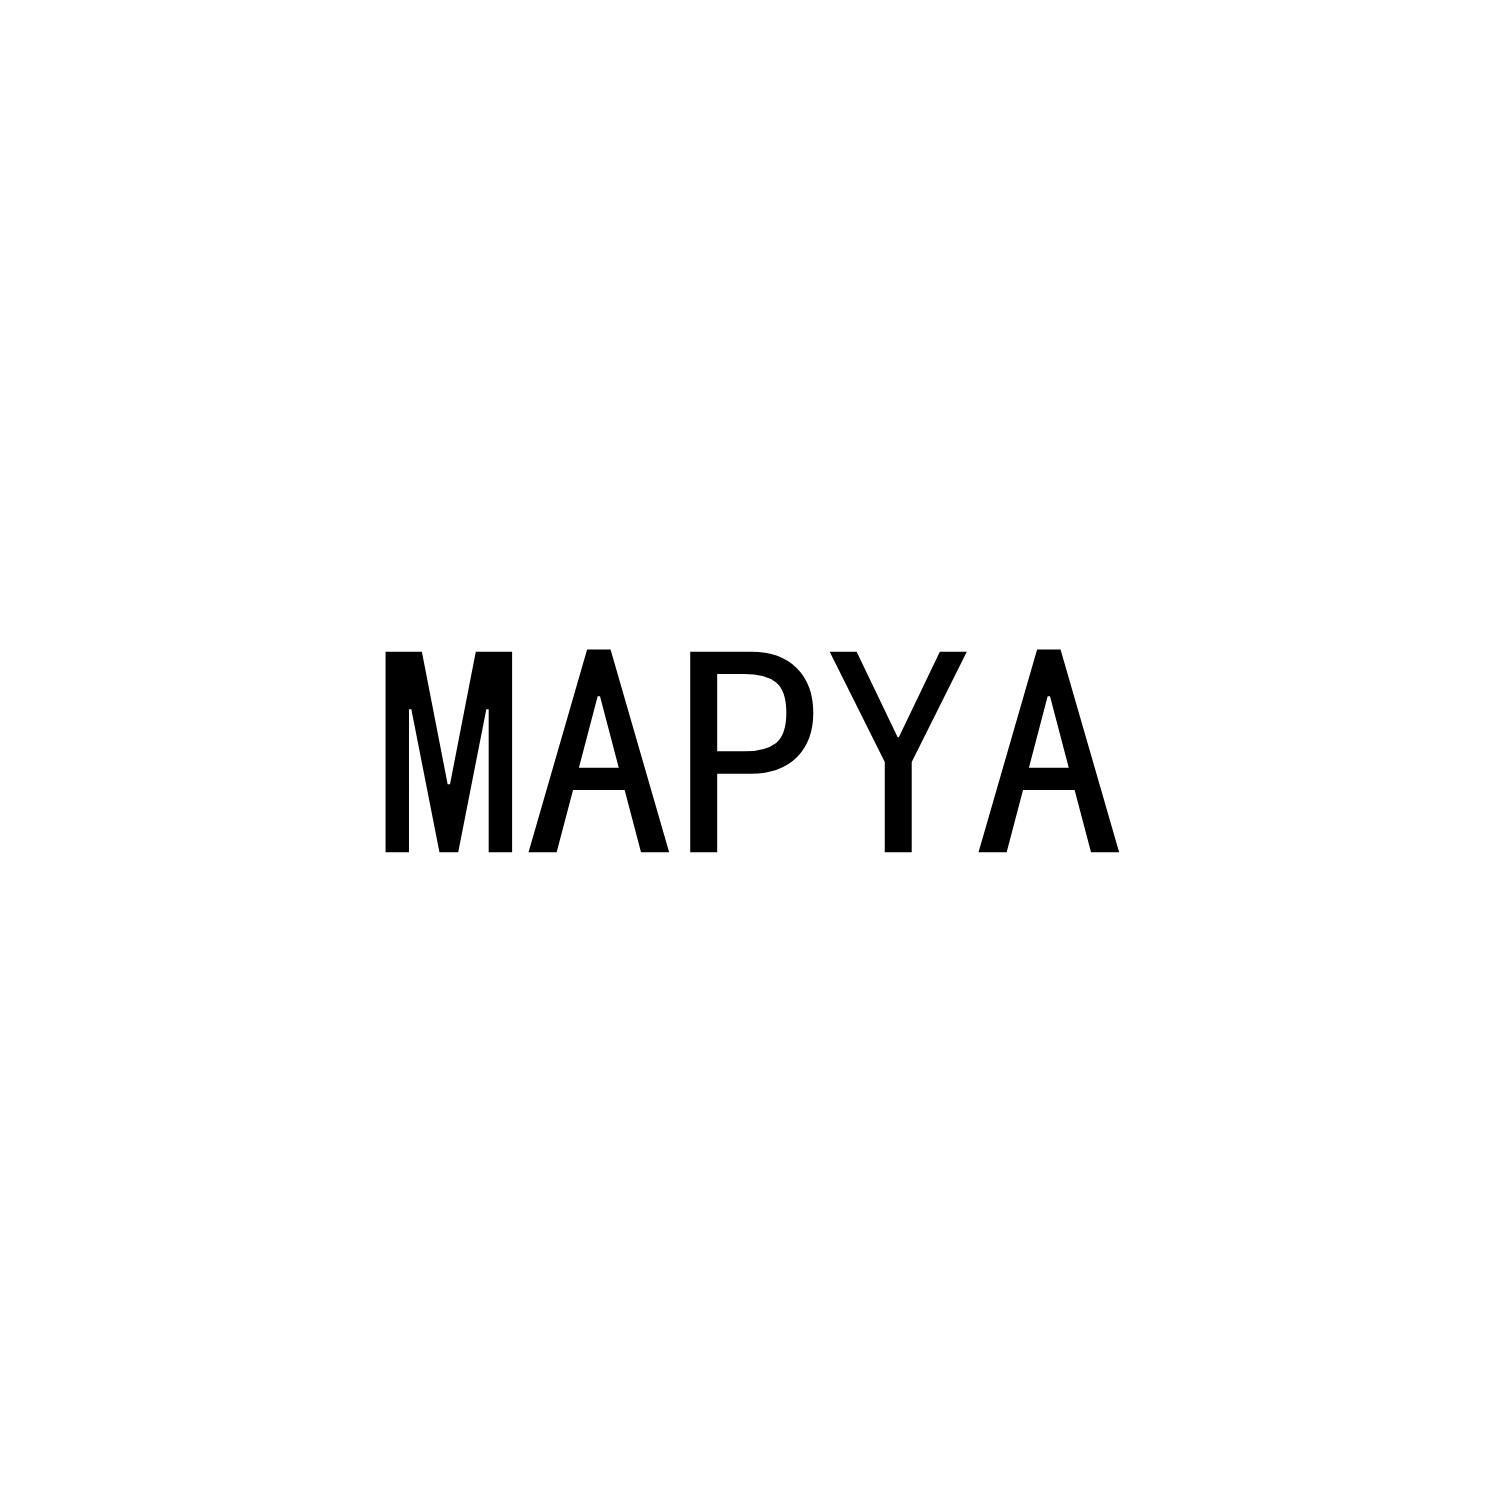 MAPYA